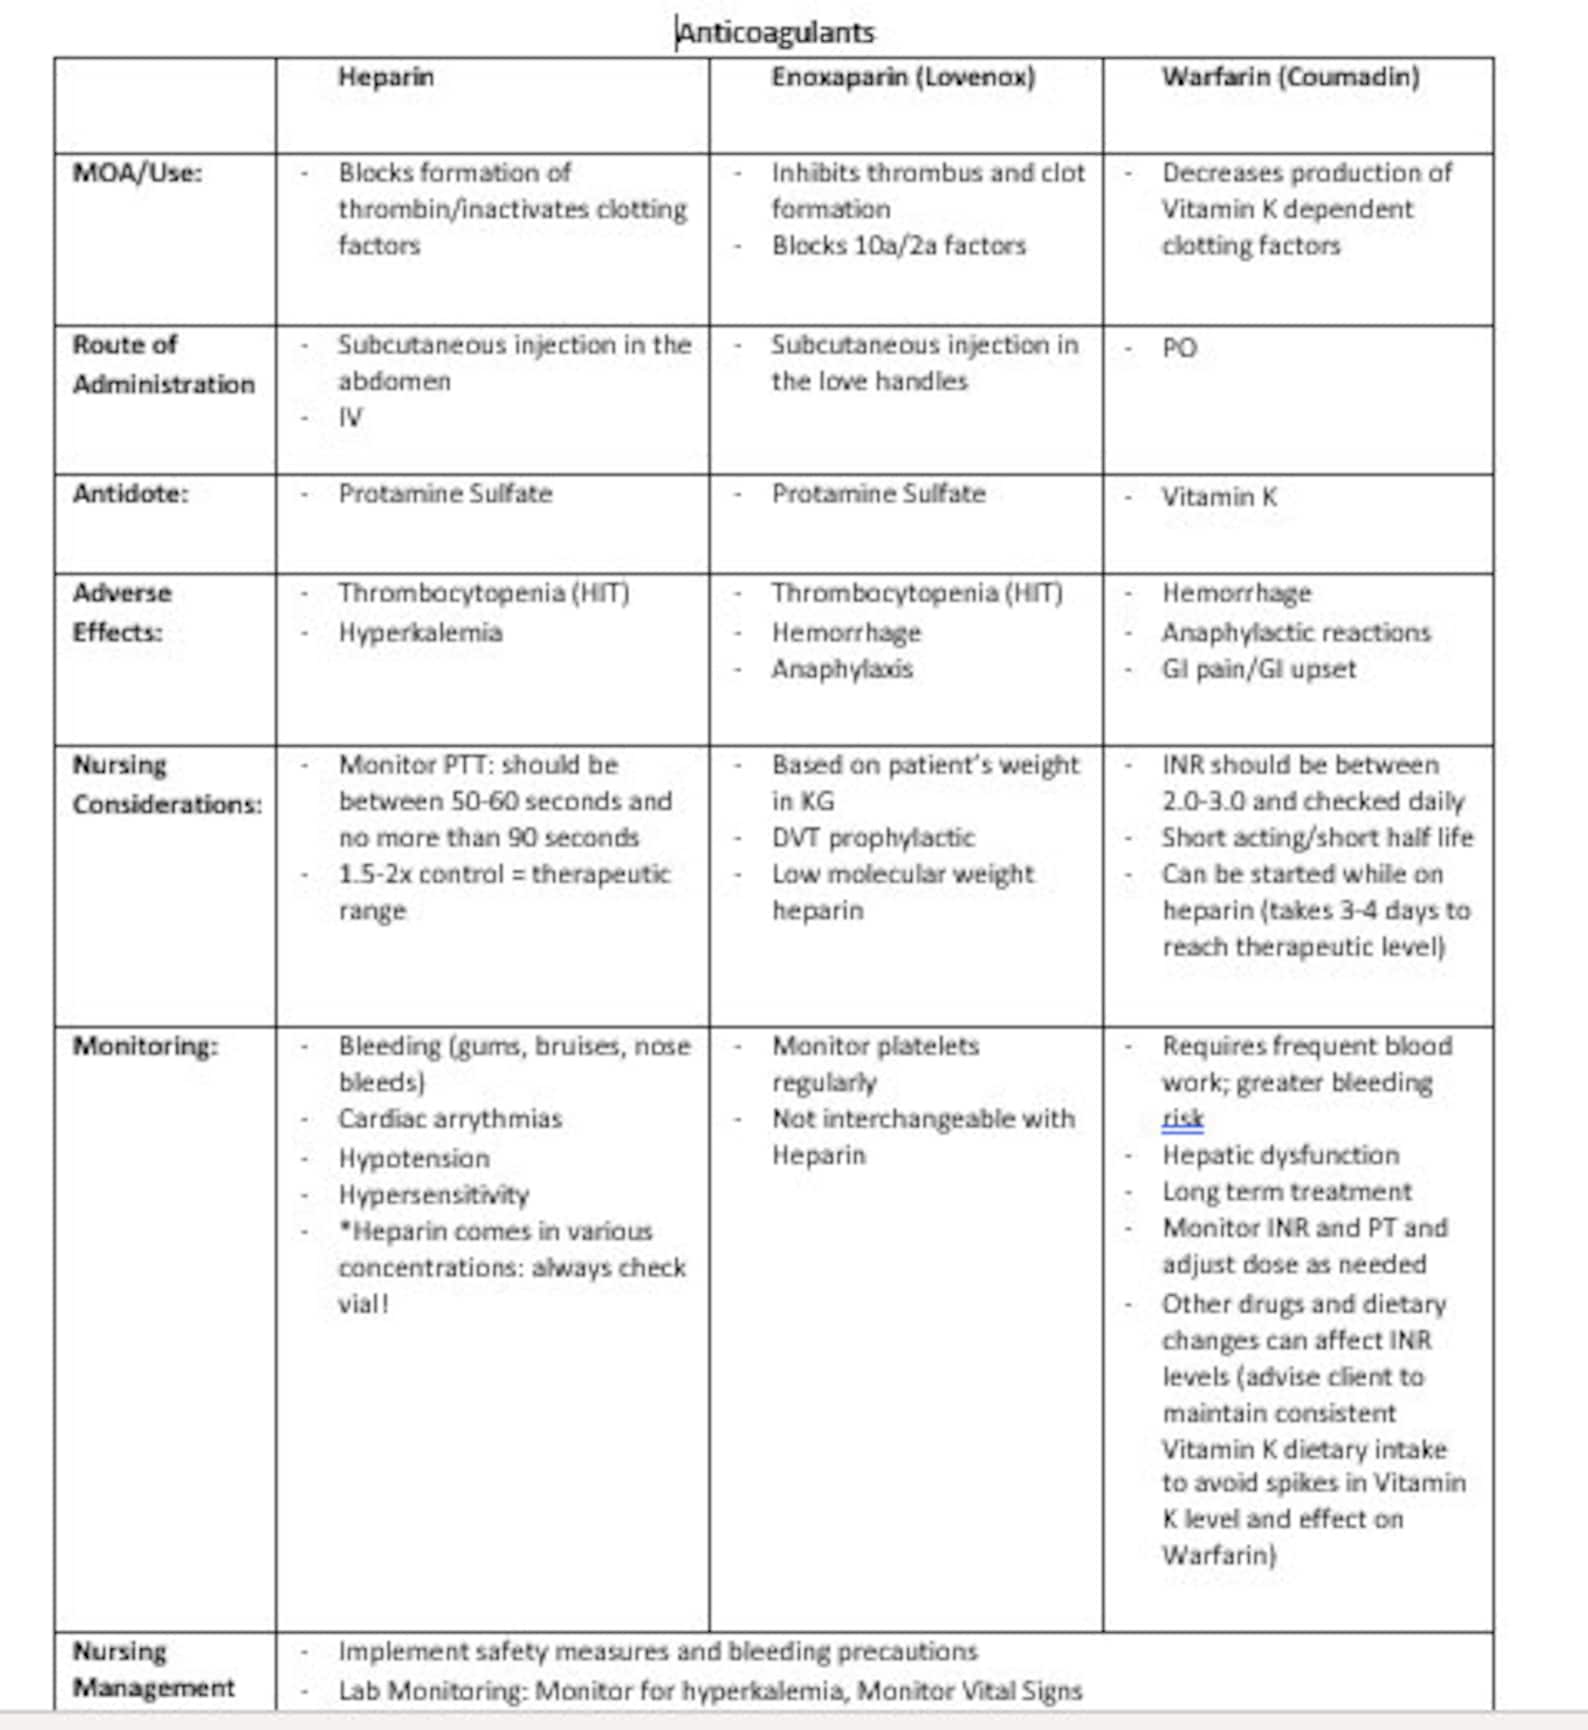 anticoagulant-comparison-table-nursing-study-guide-etsy